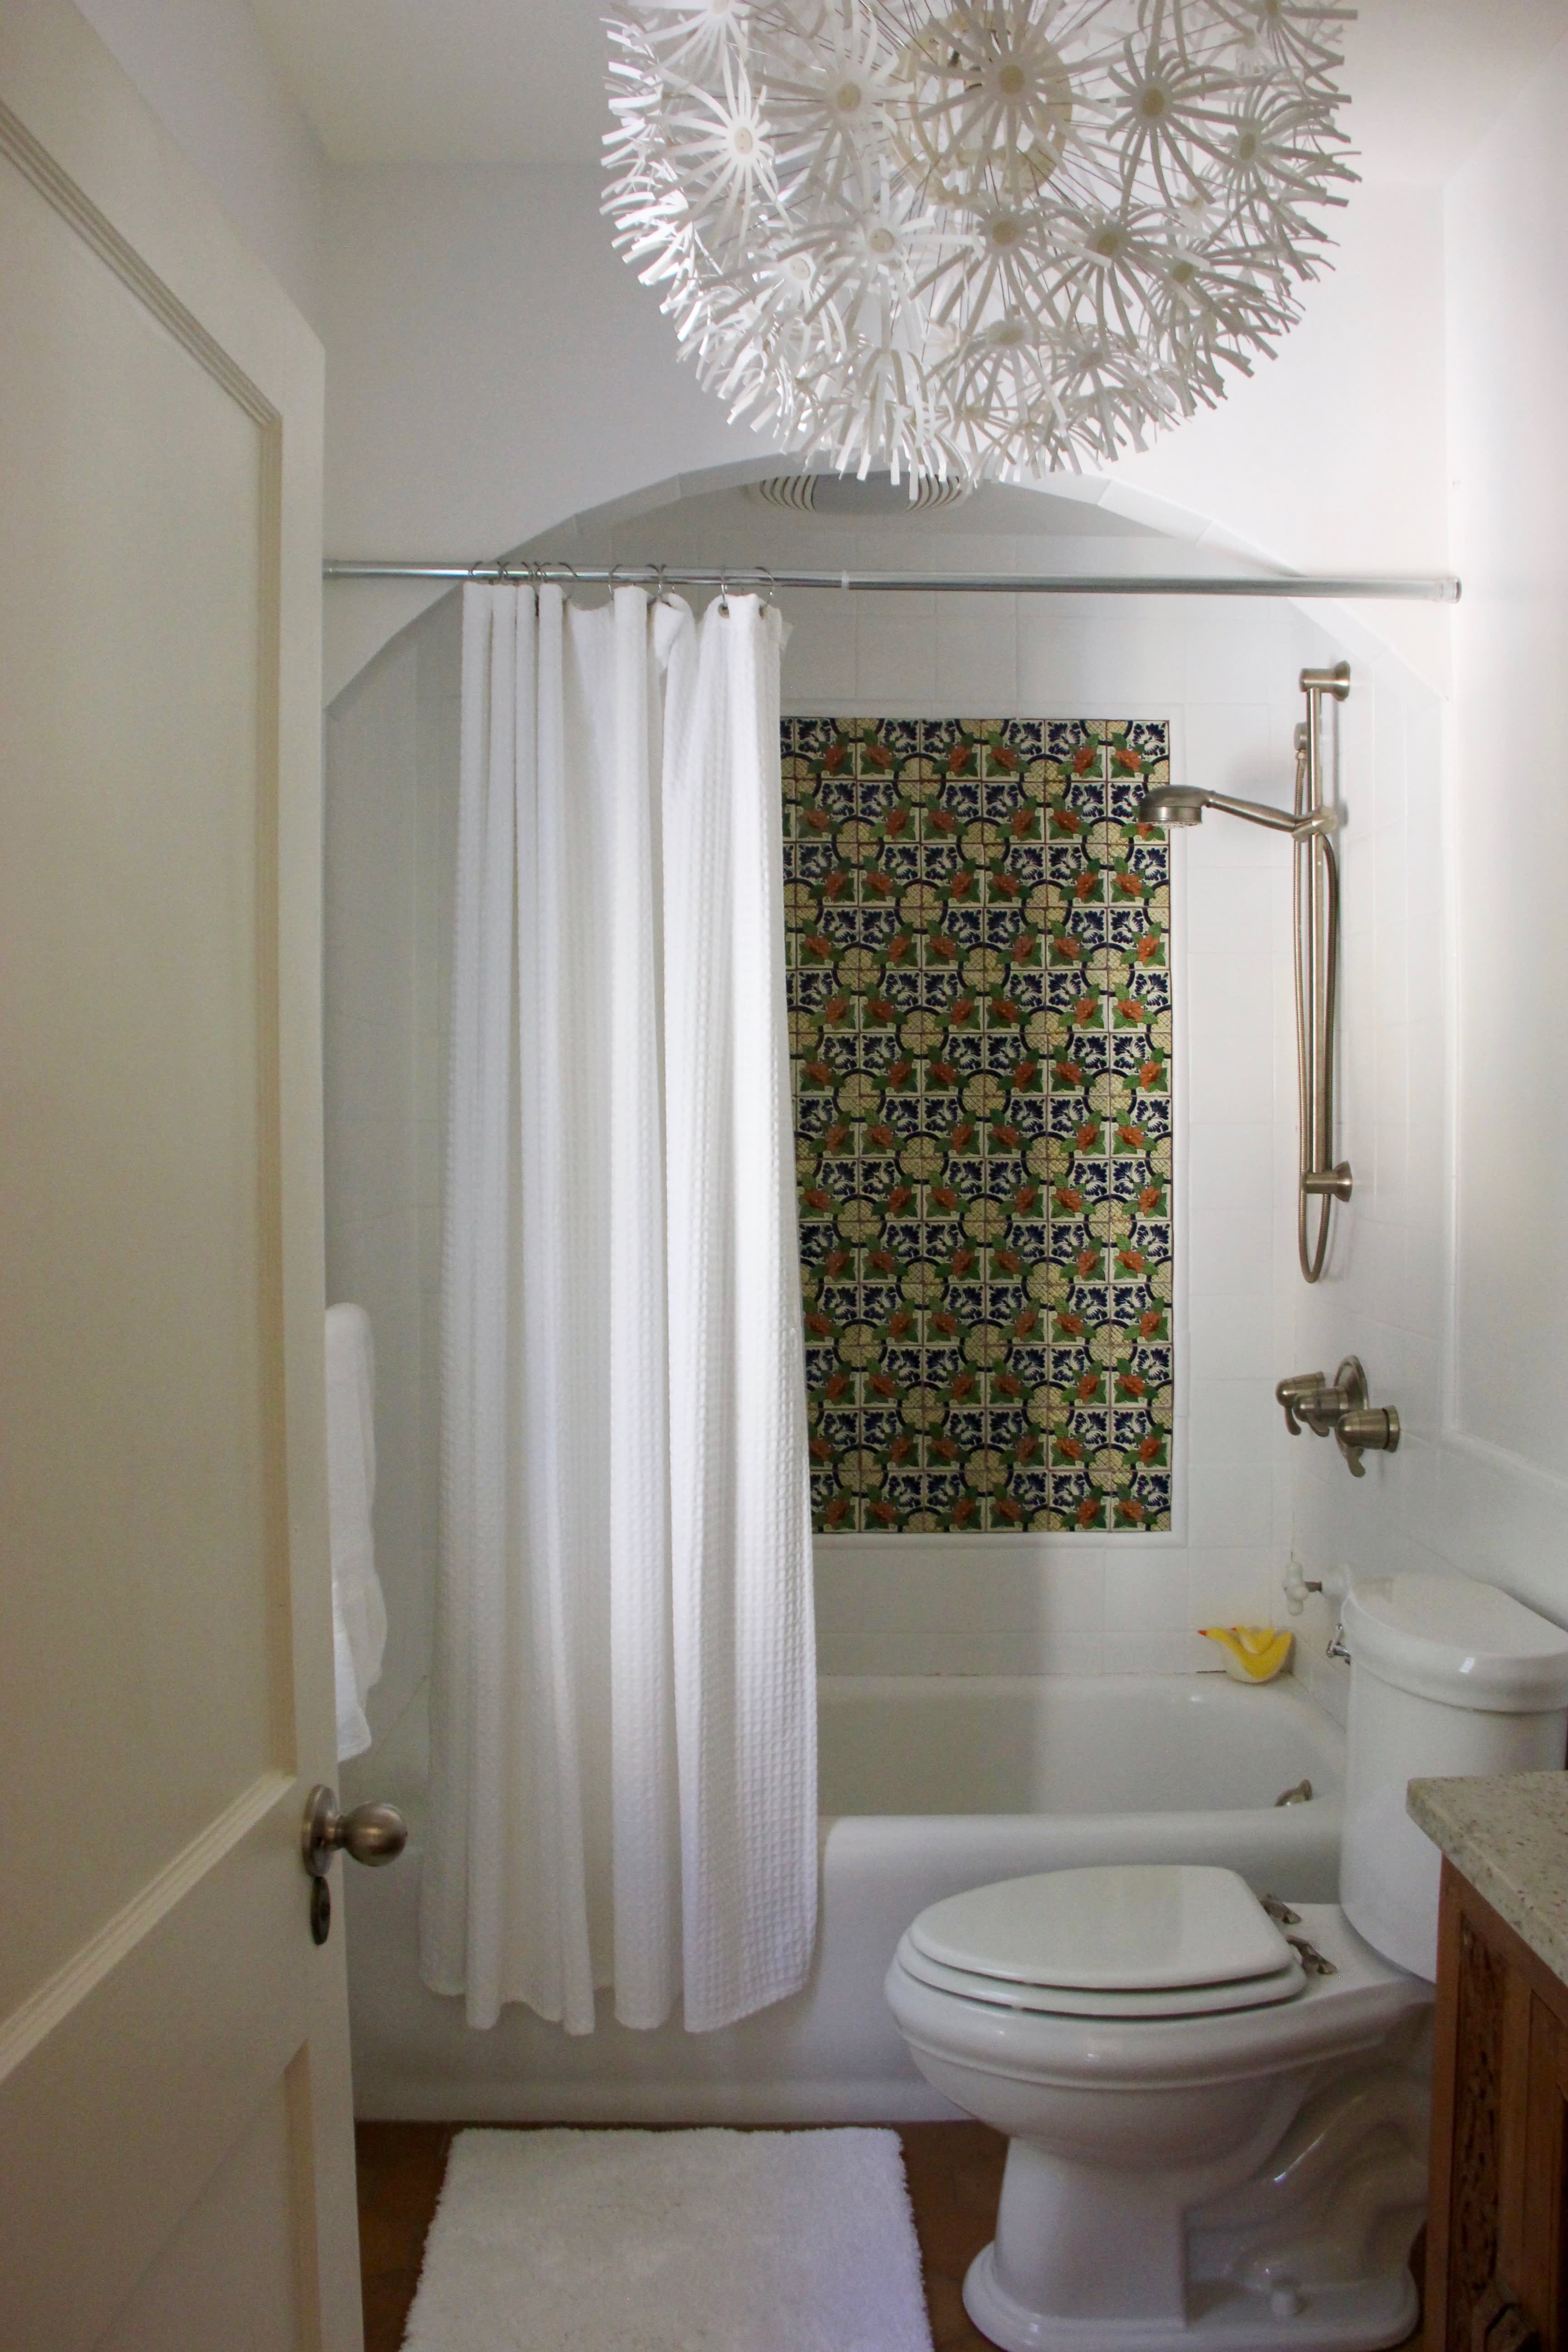 Bathroom Tile Ideas - Floor, Shower, Wall Designs ...